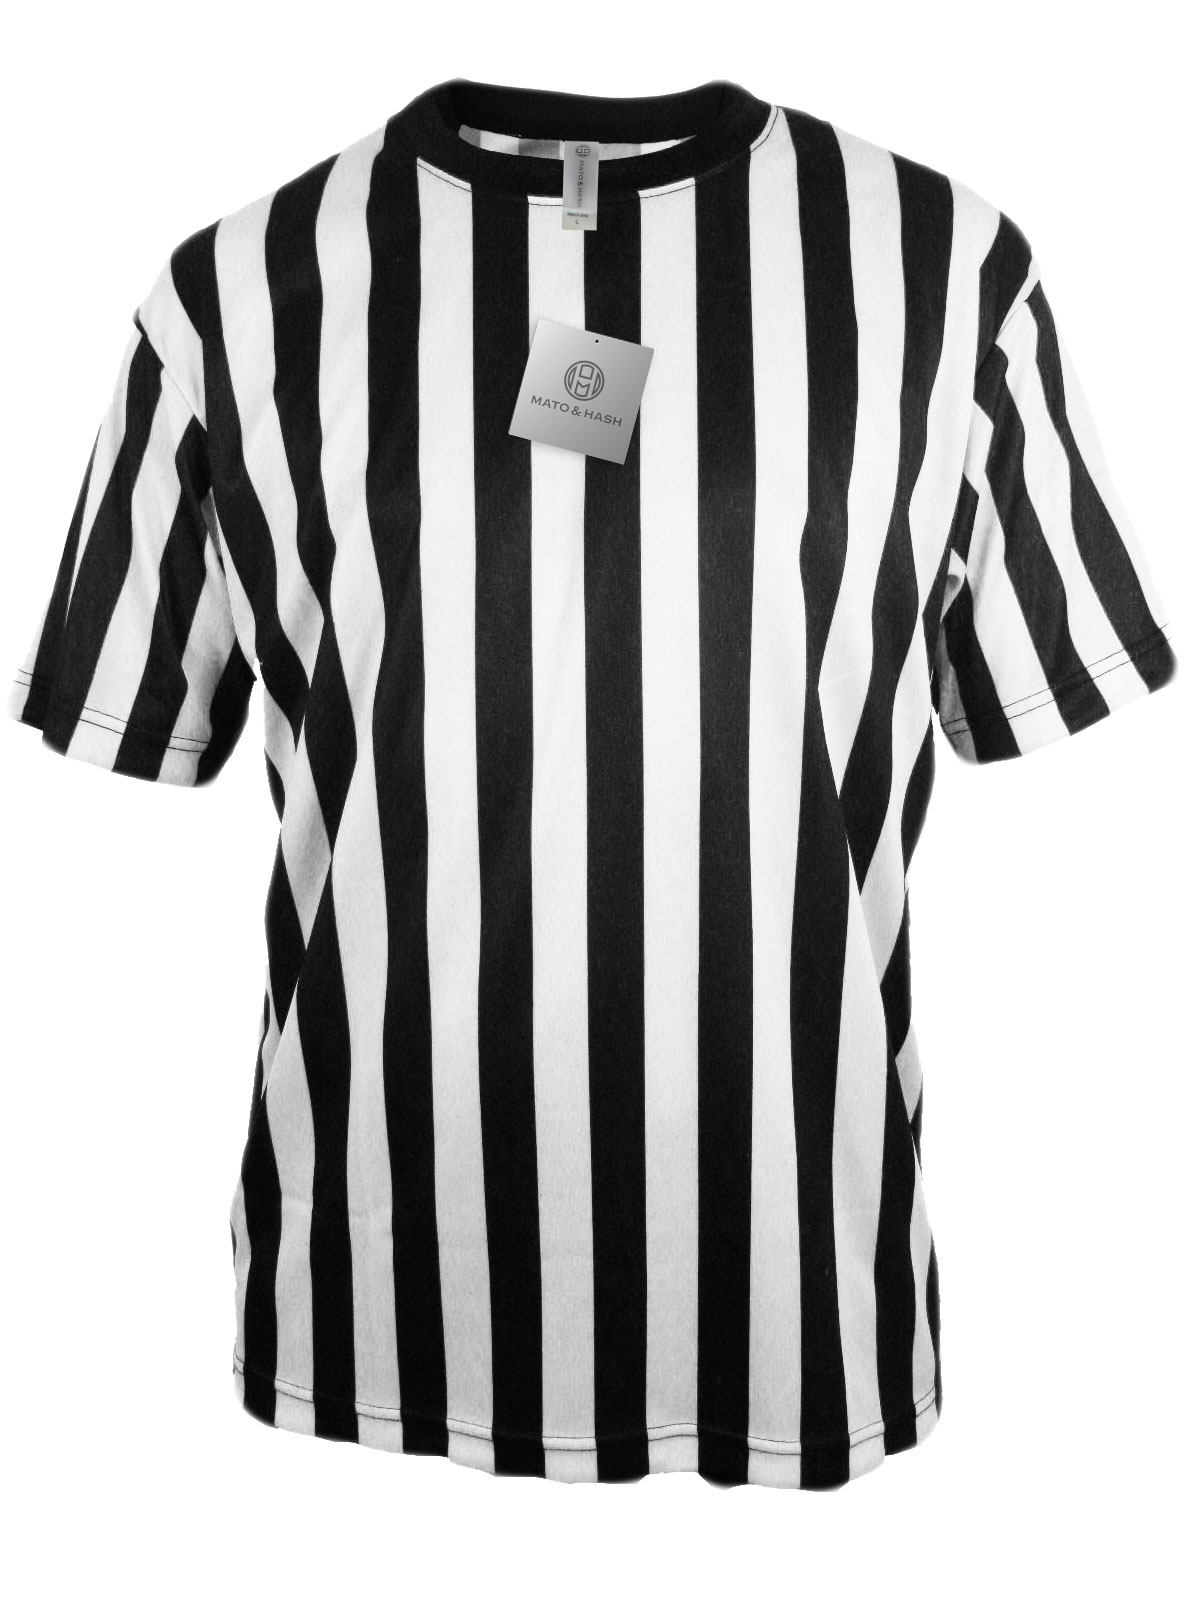 referee shirts - USA News Collections